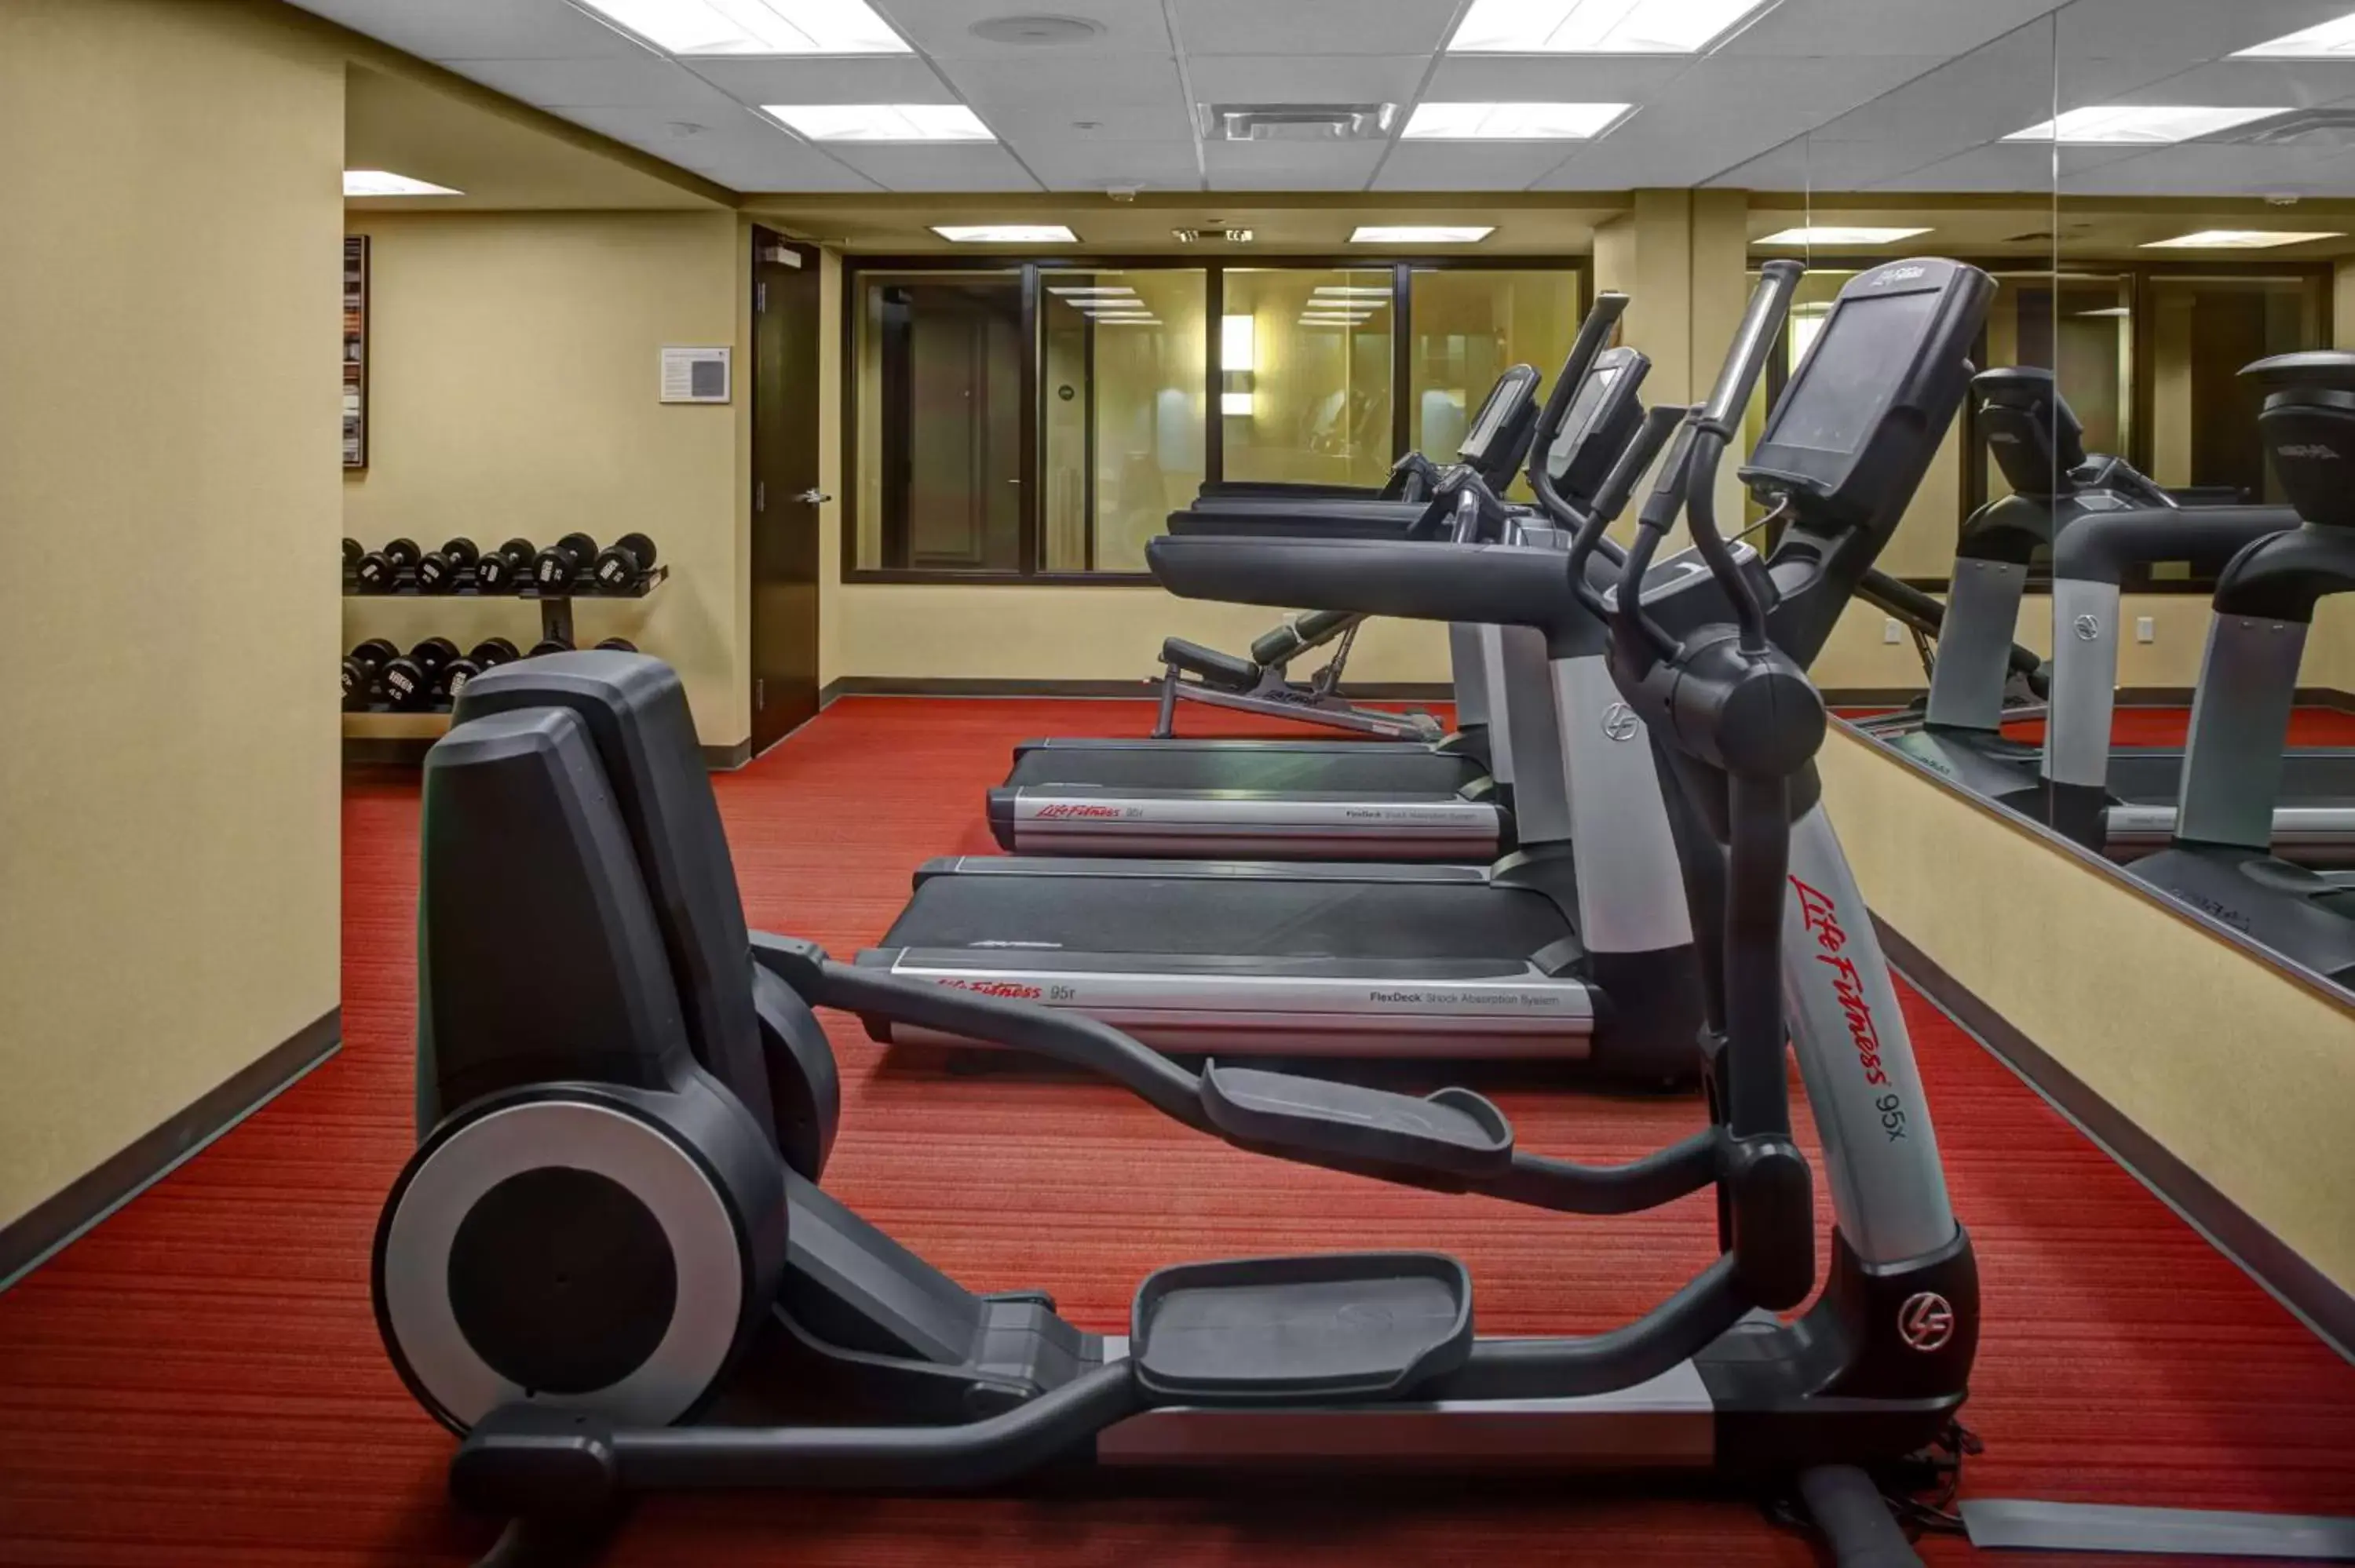 Fitness centre/facilities, Fitness Center/Facilities in Hyatt Place Delray Beach